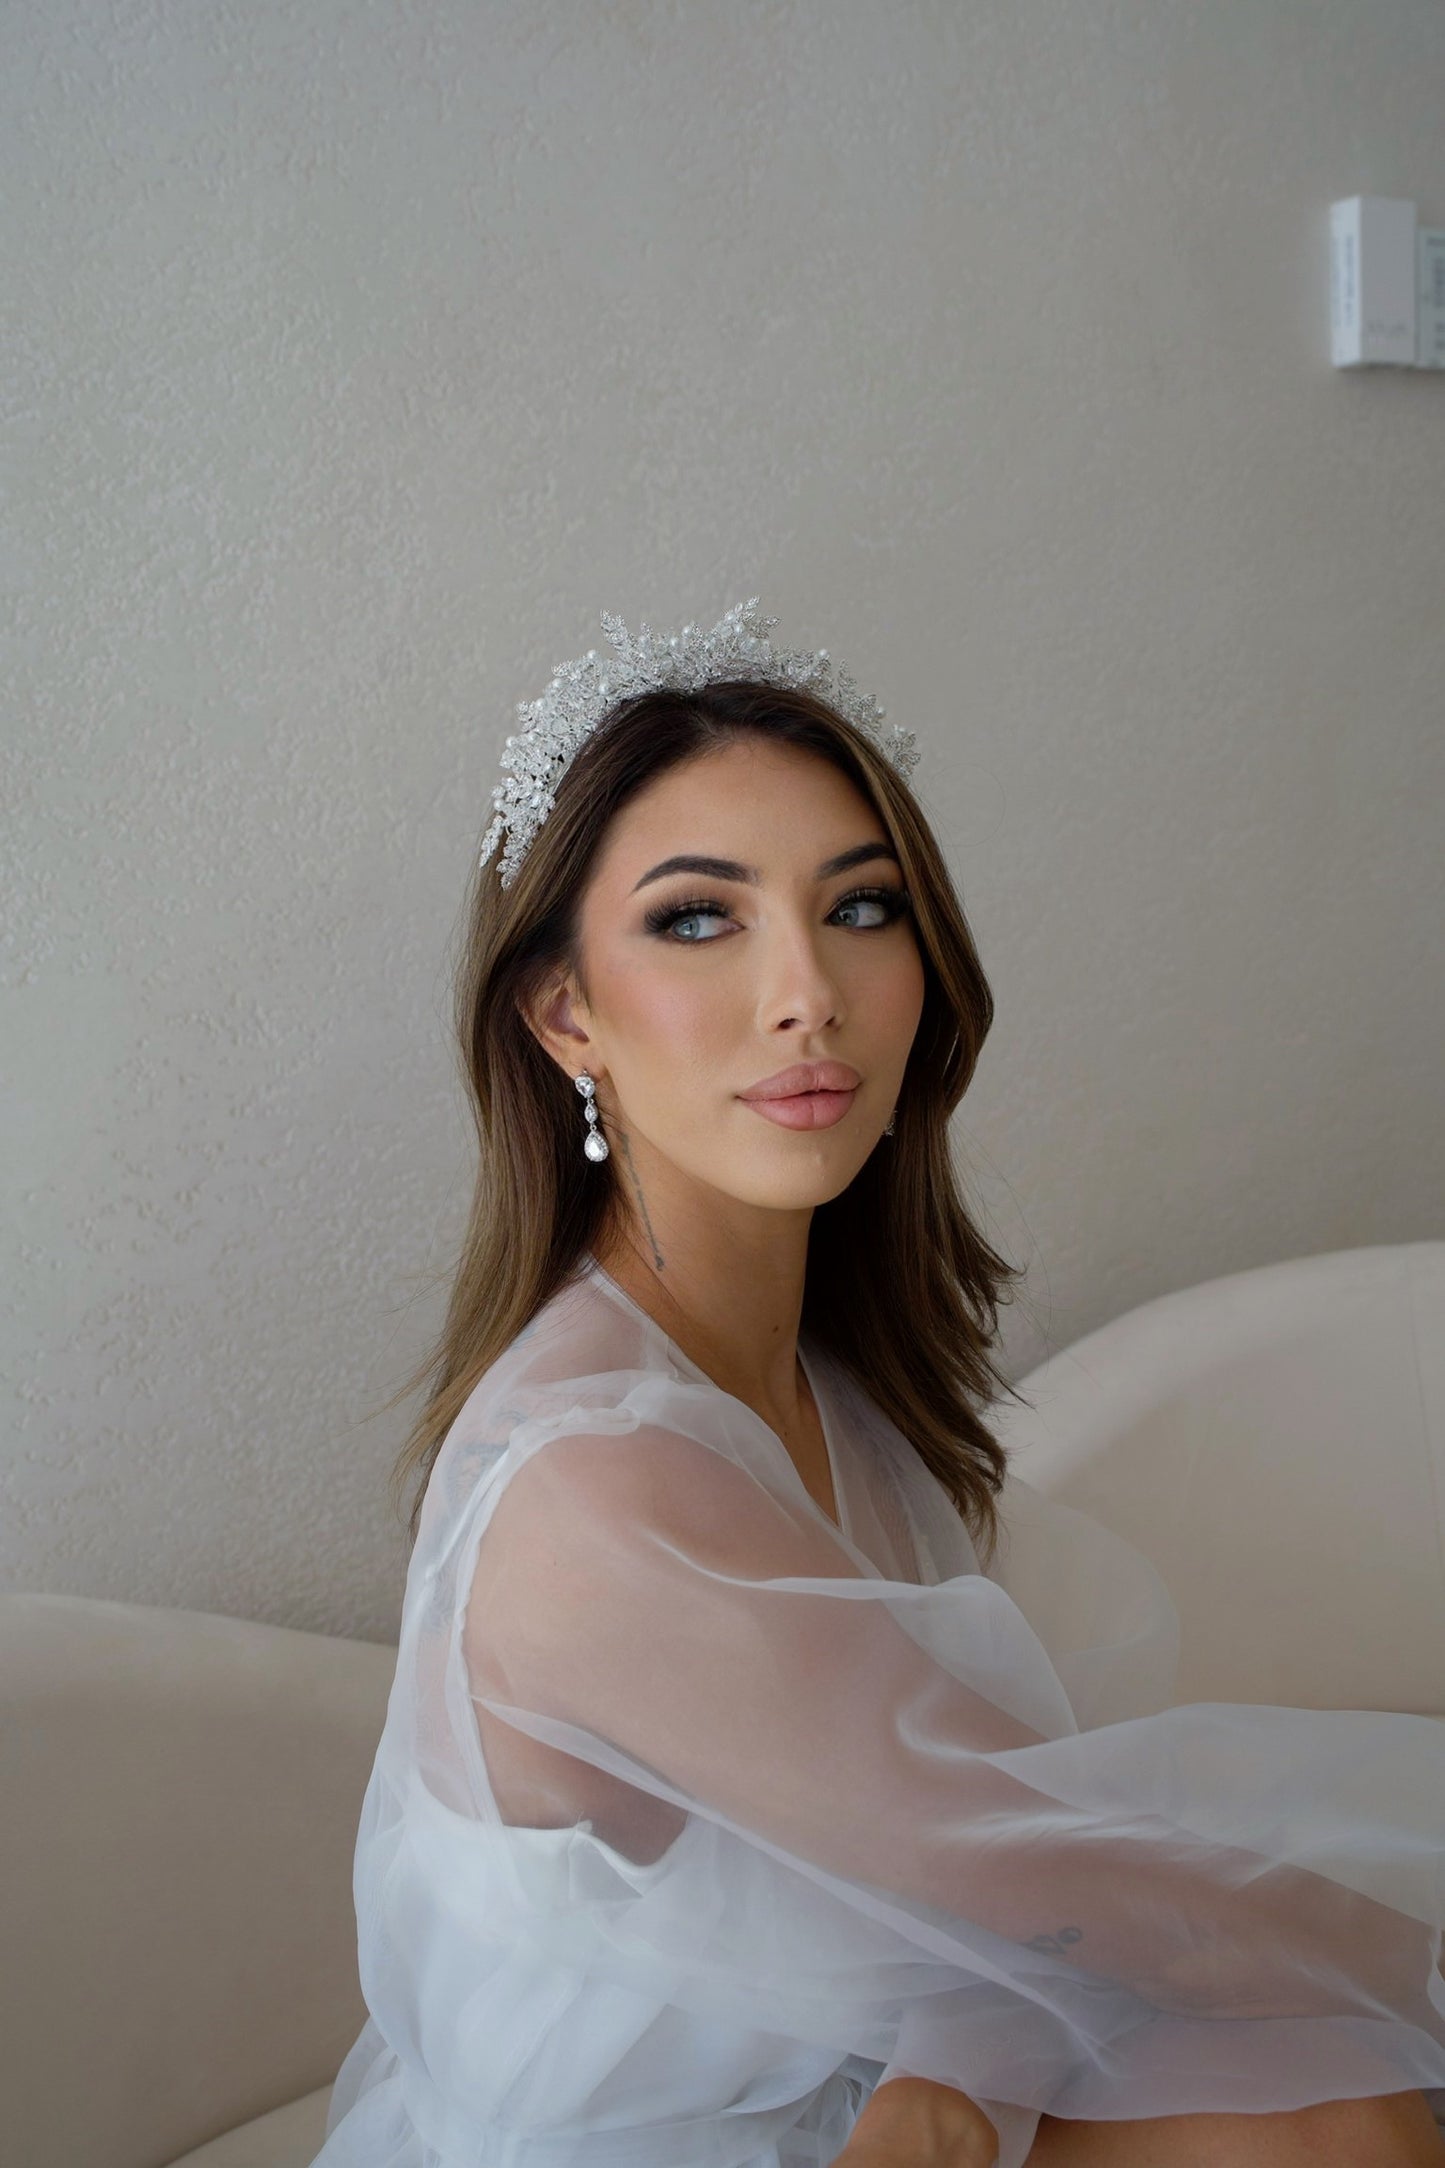 Elegant lady in white dress, tiara, and stylish Iris silver earrings